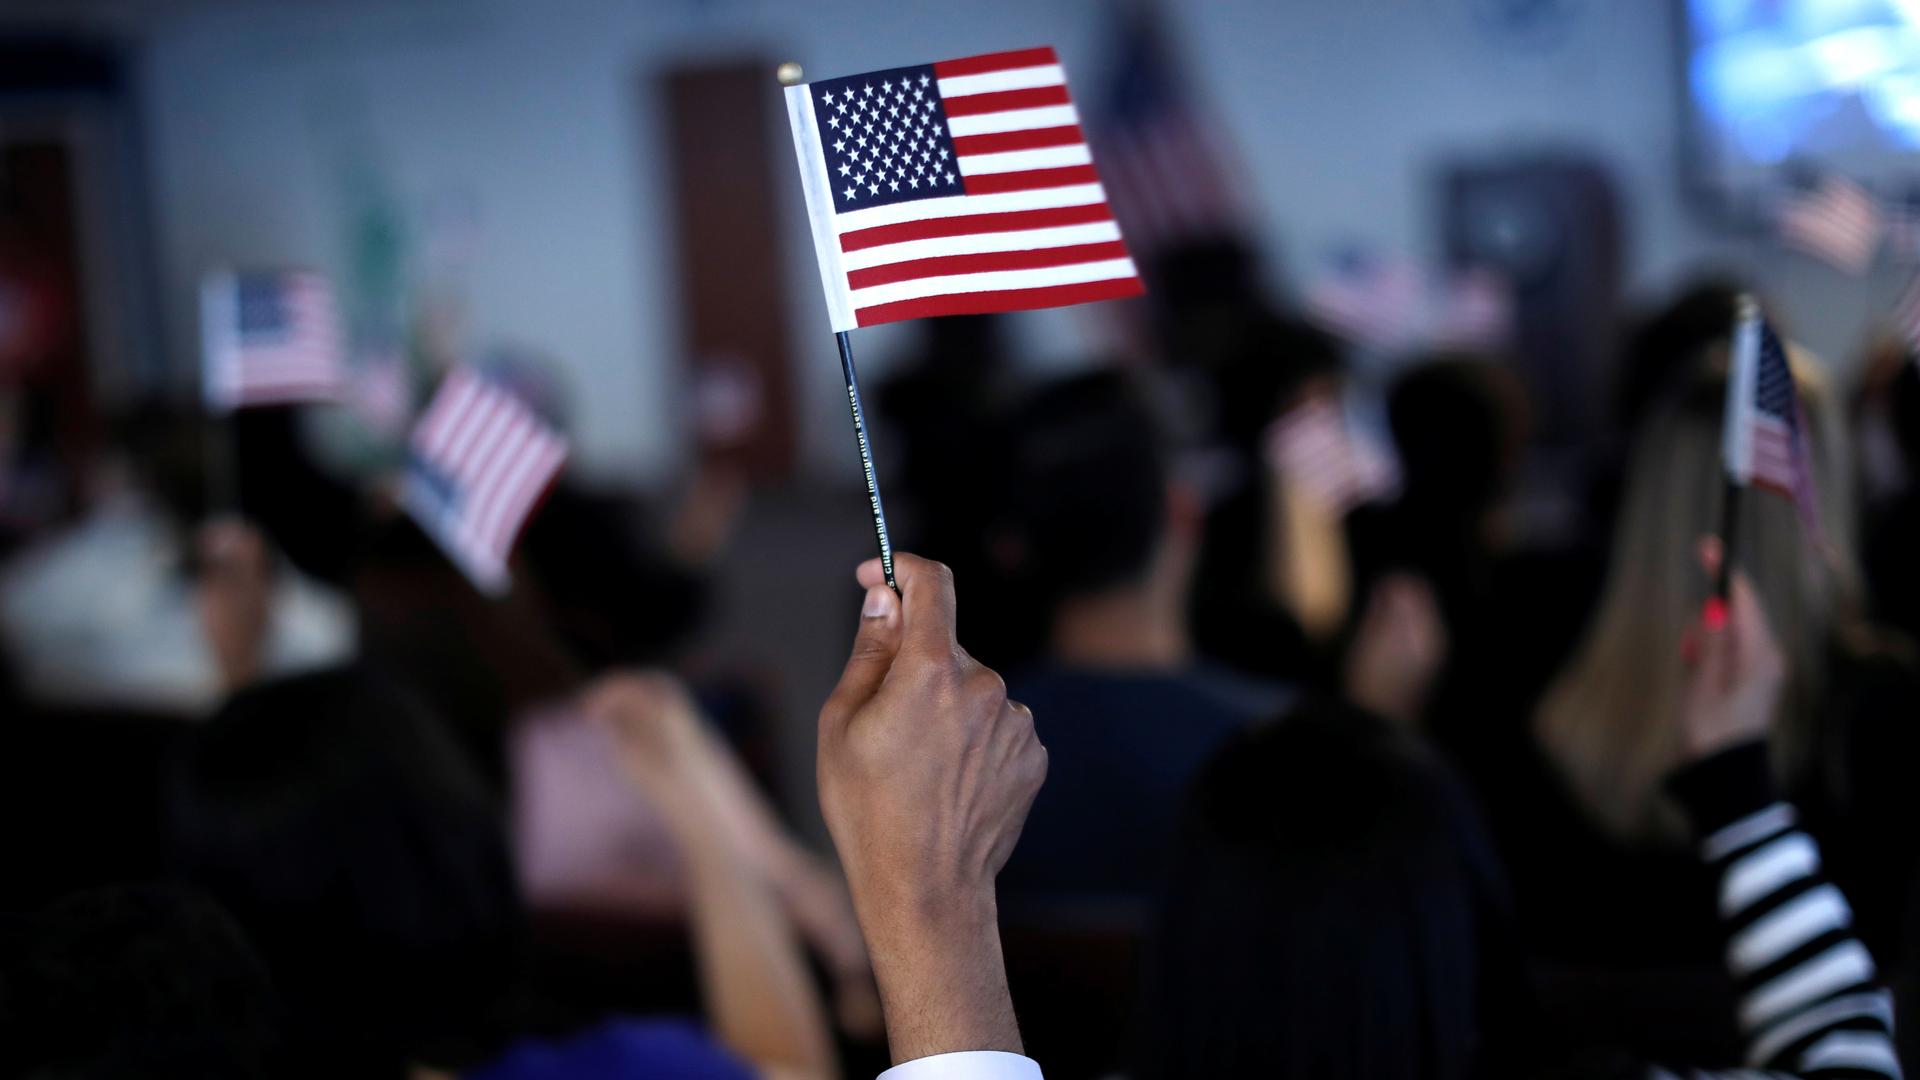 A hand waving a small American flag